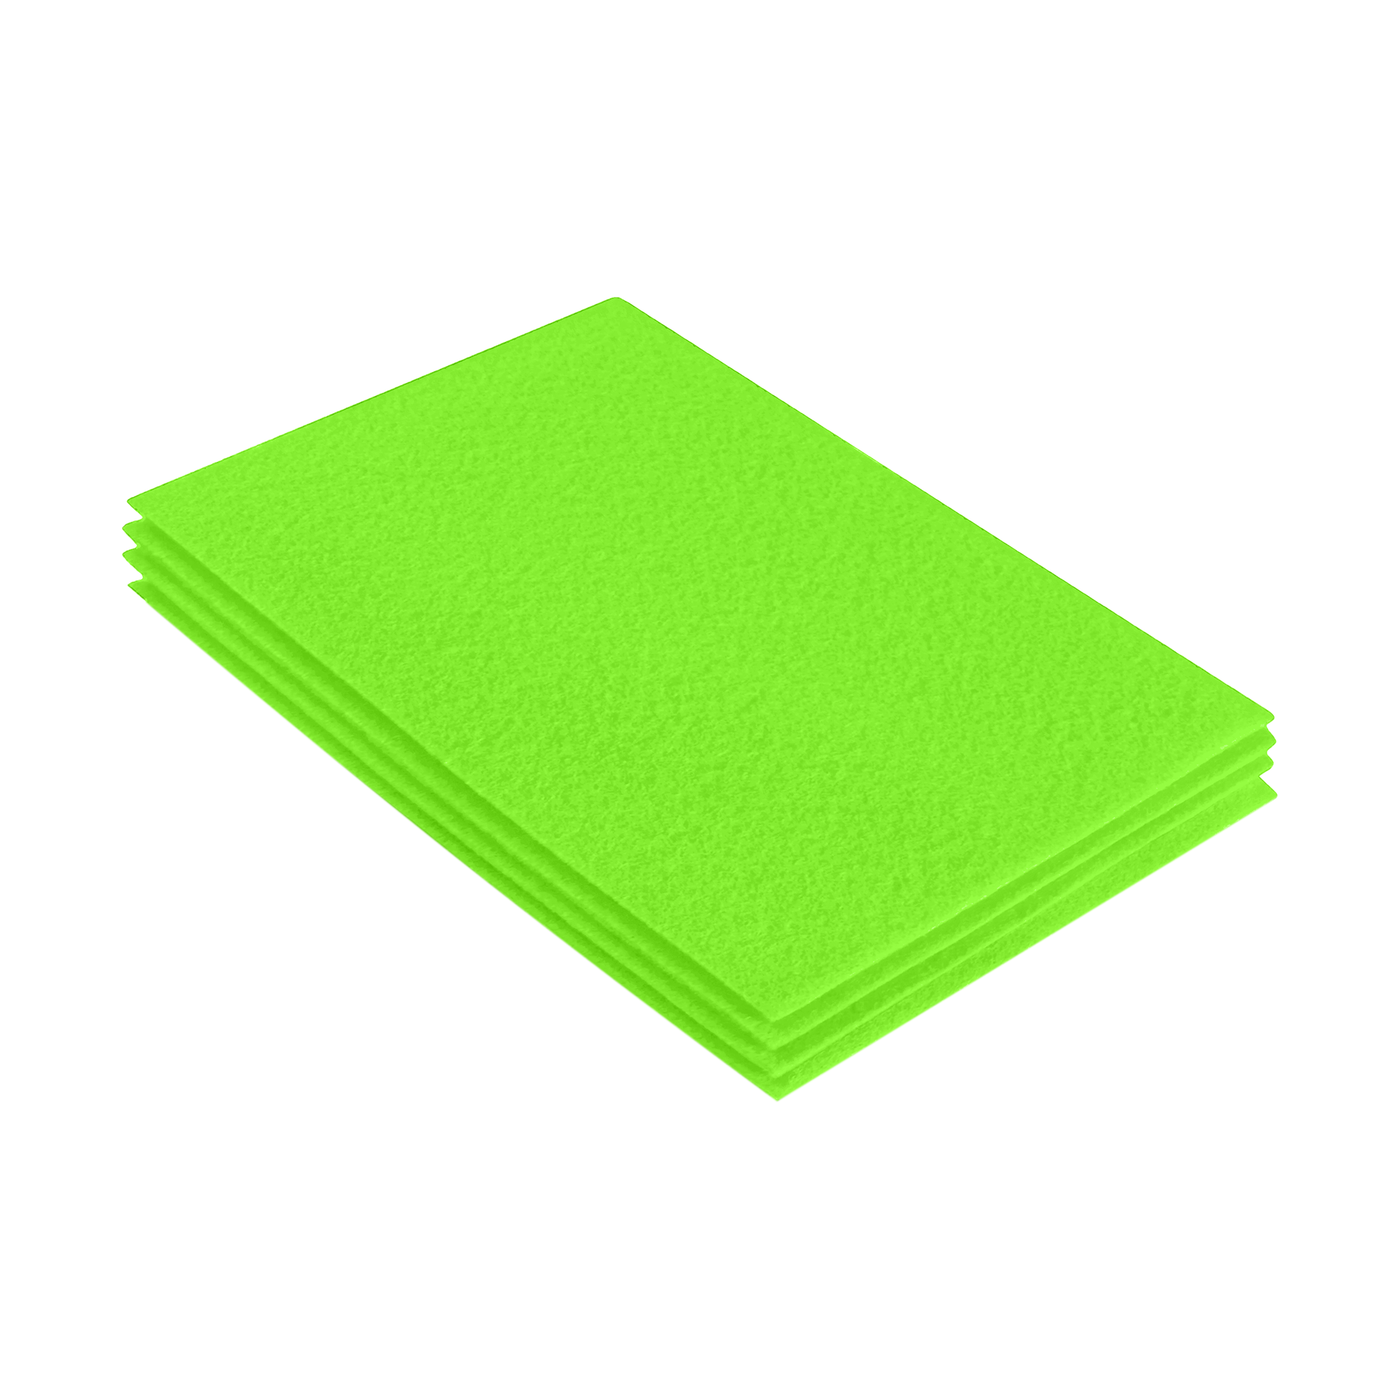 Acrylic Felt 9"X12" Sheet Packs | Neon Green - FabricLA.com